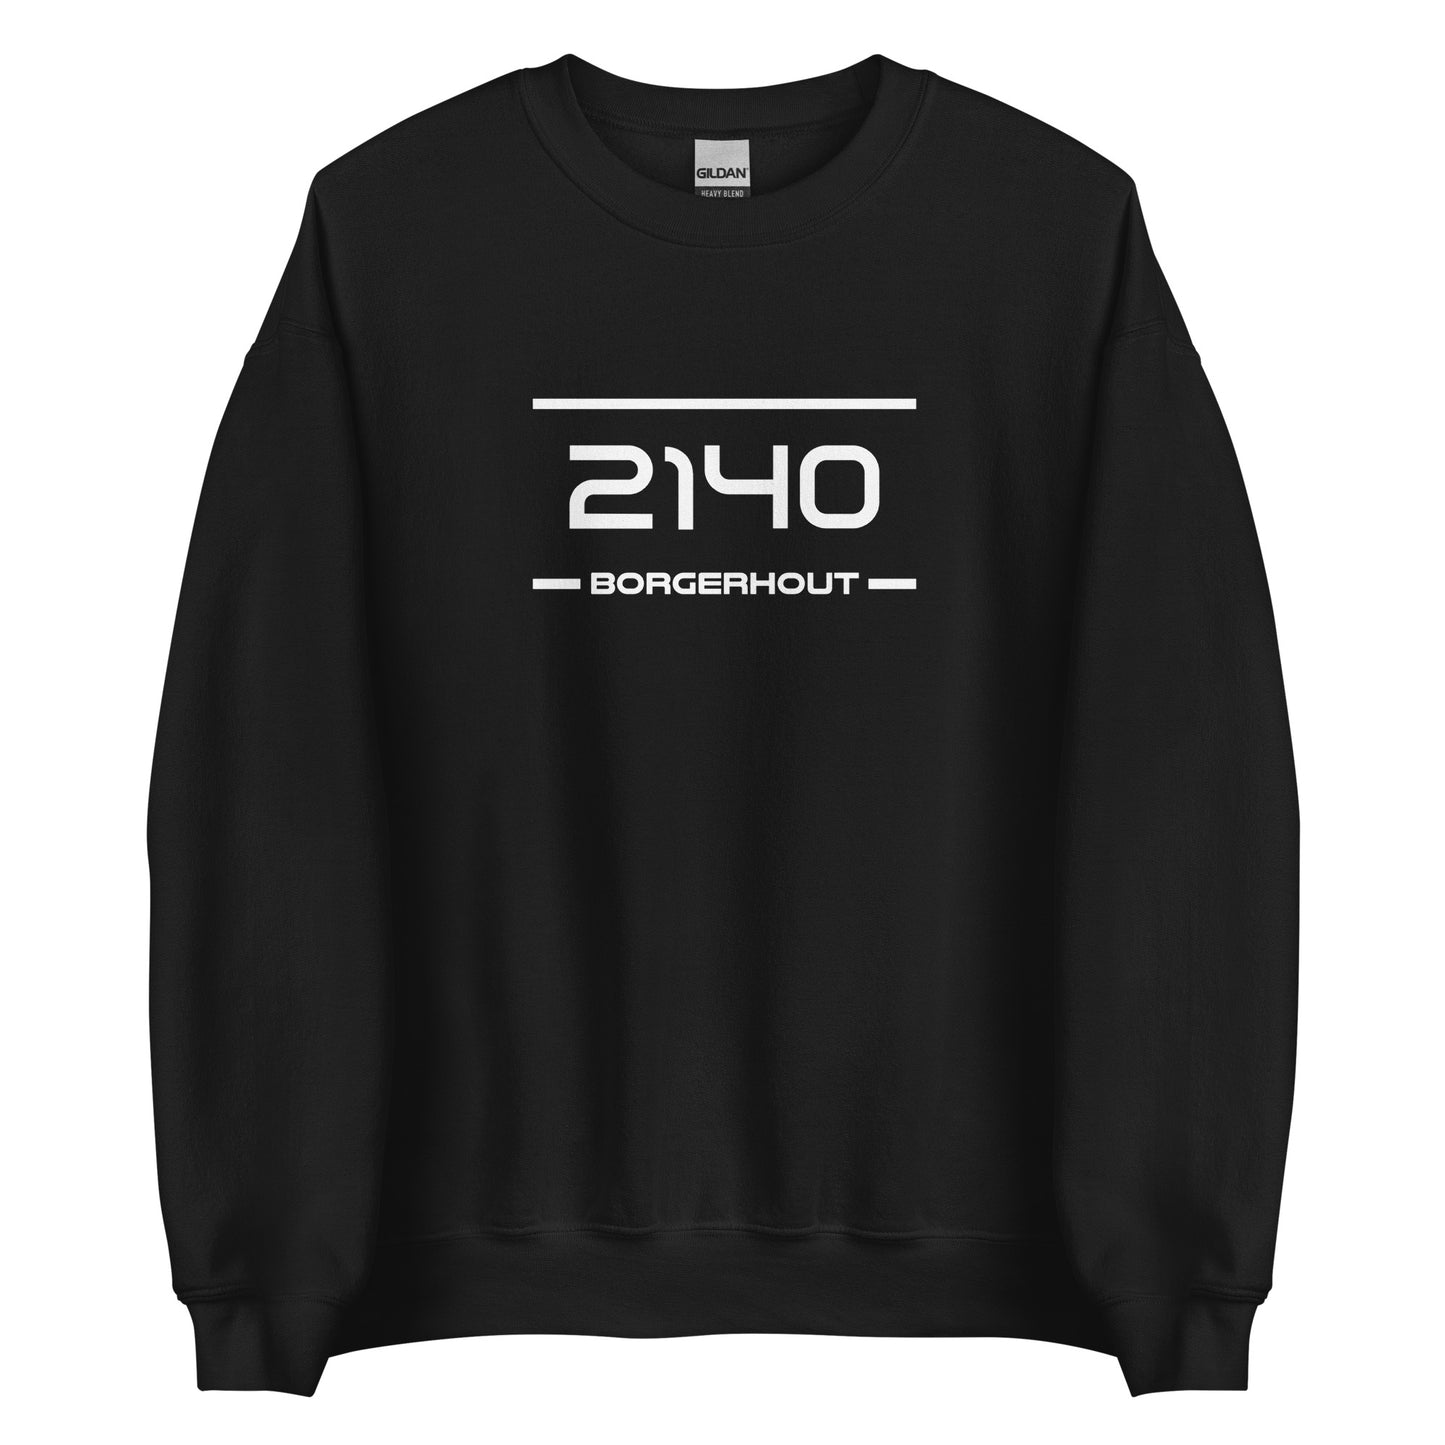 Sweater - 2140 - Borgenhout (M/V)